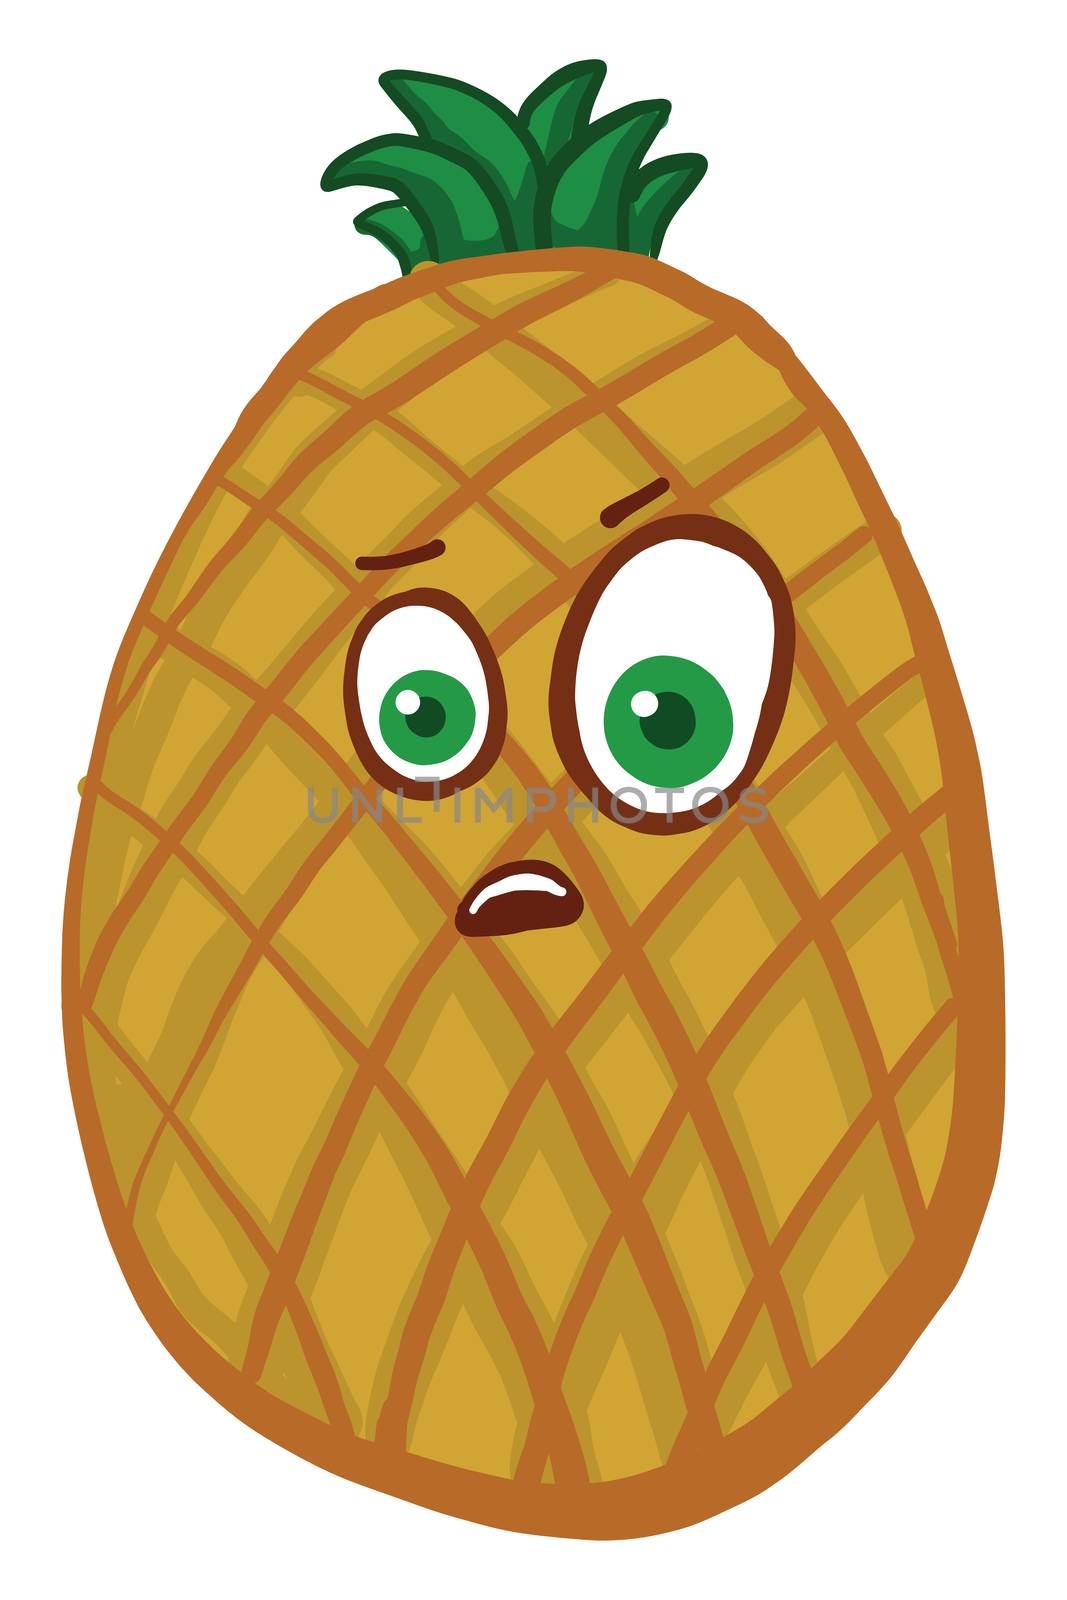 Scared pineapple , illustration, vector on white background by Morphart